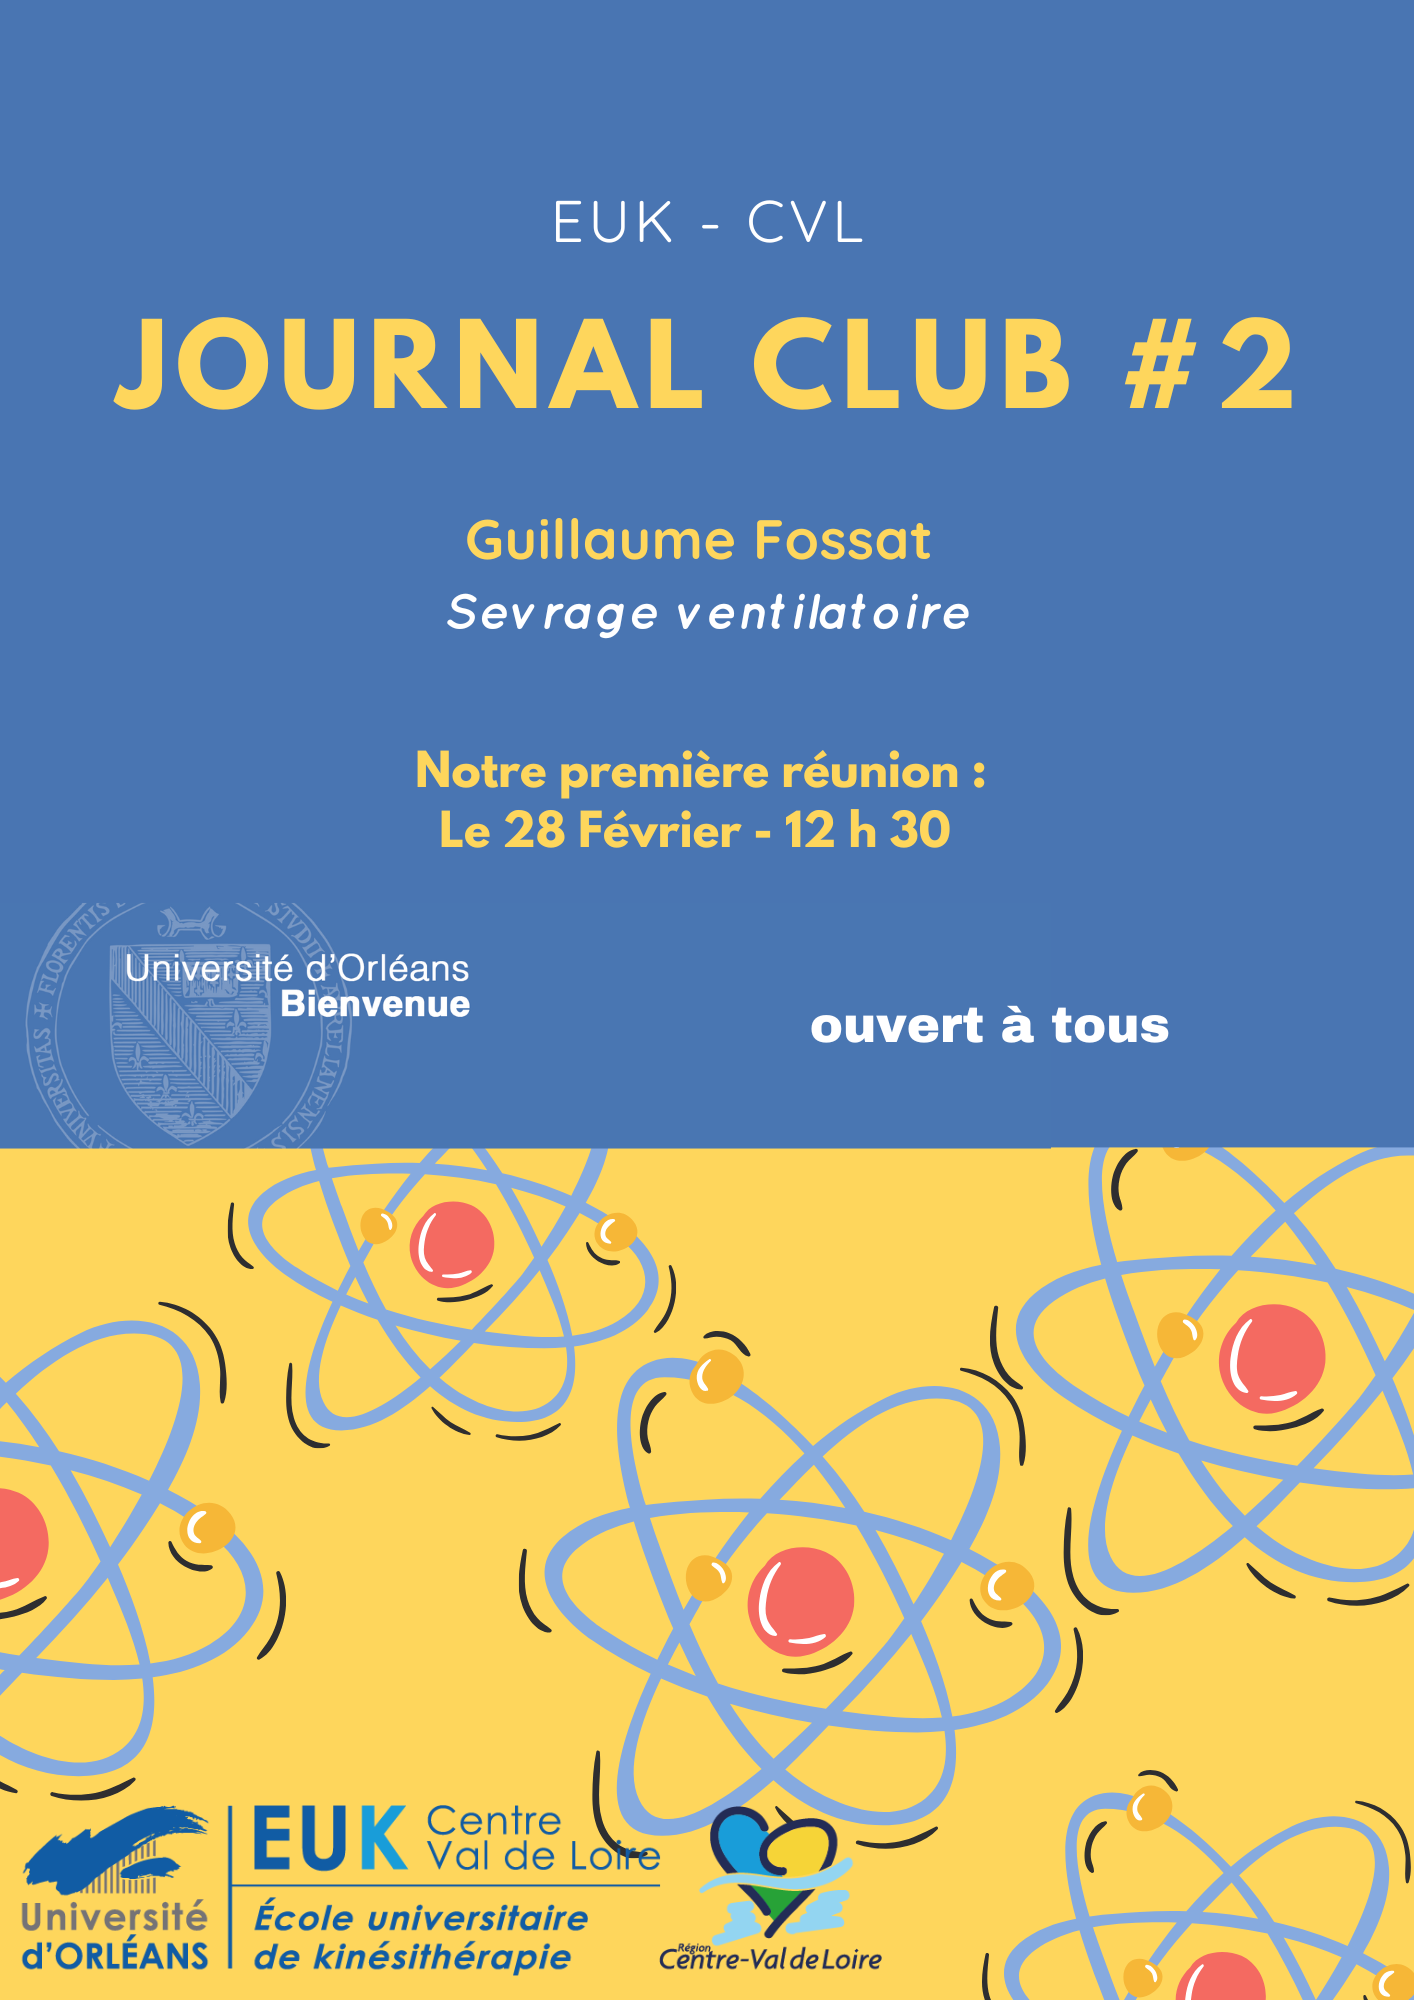 Journal club #2